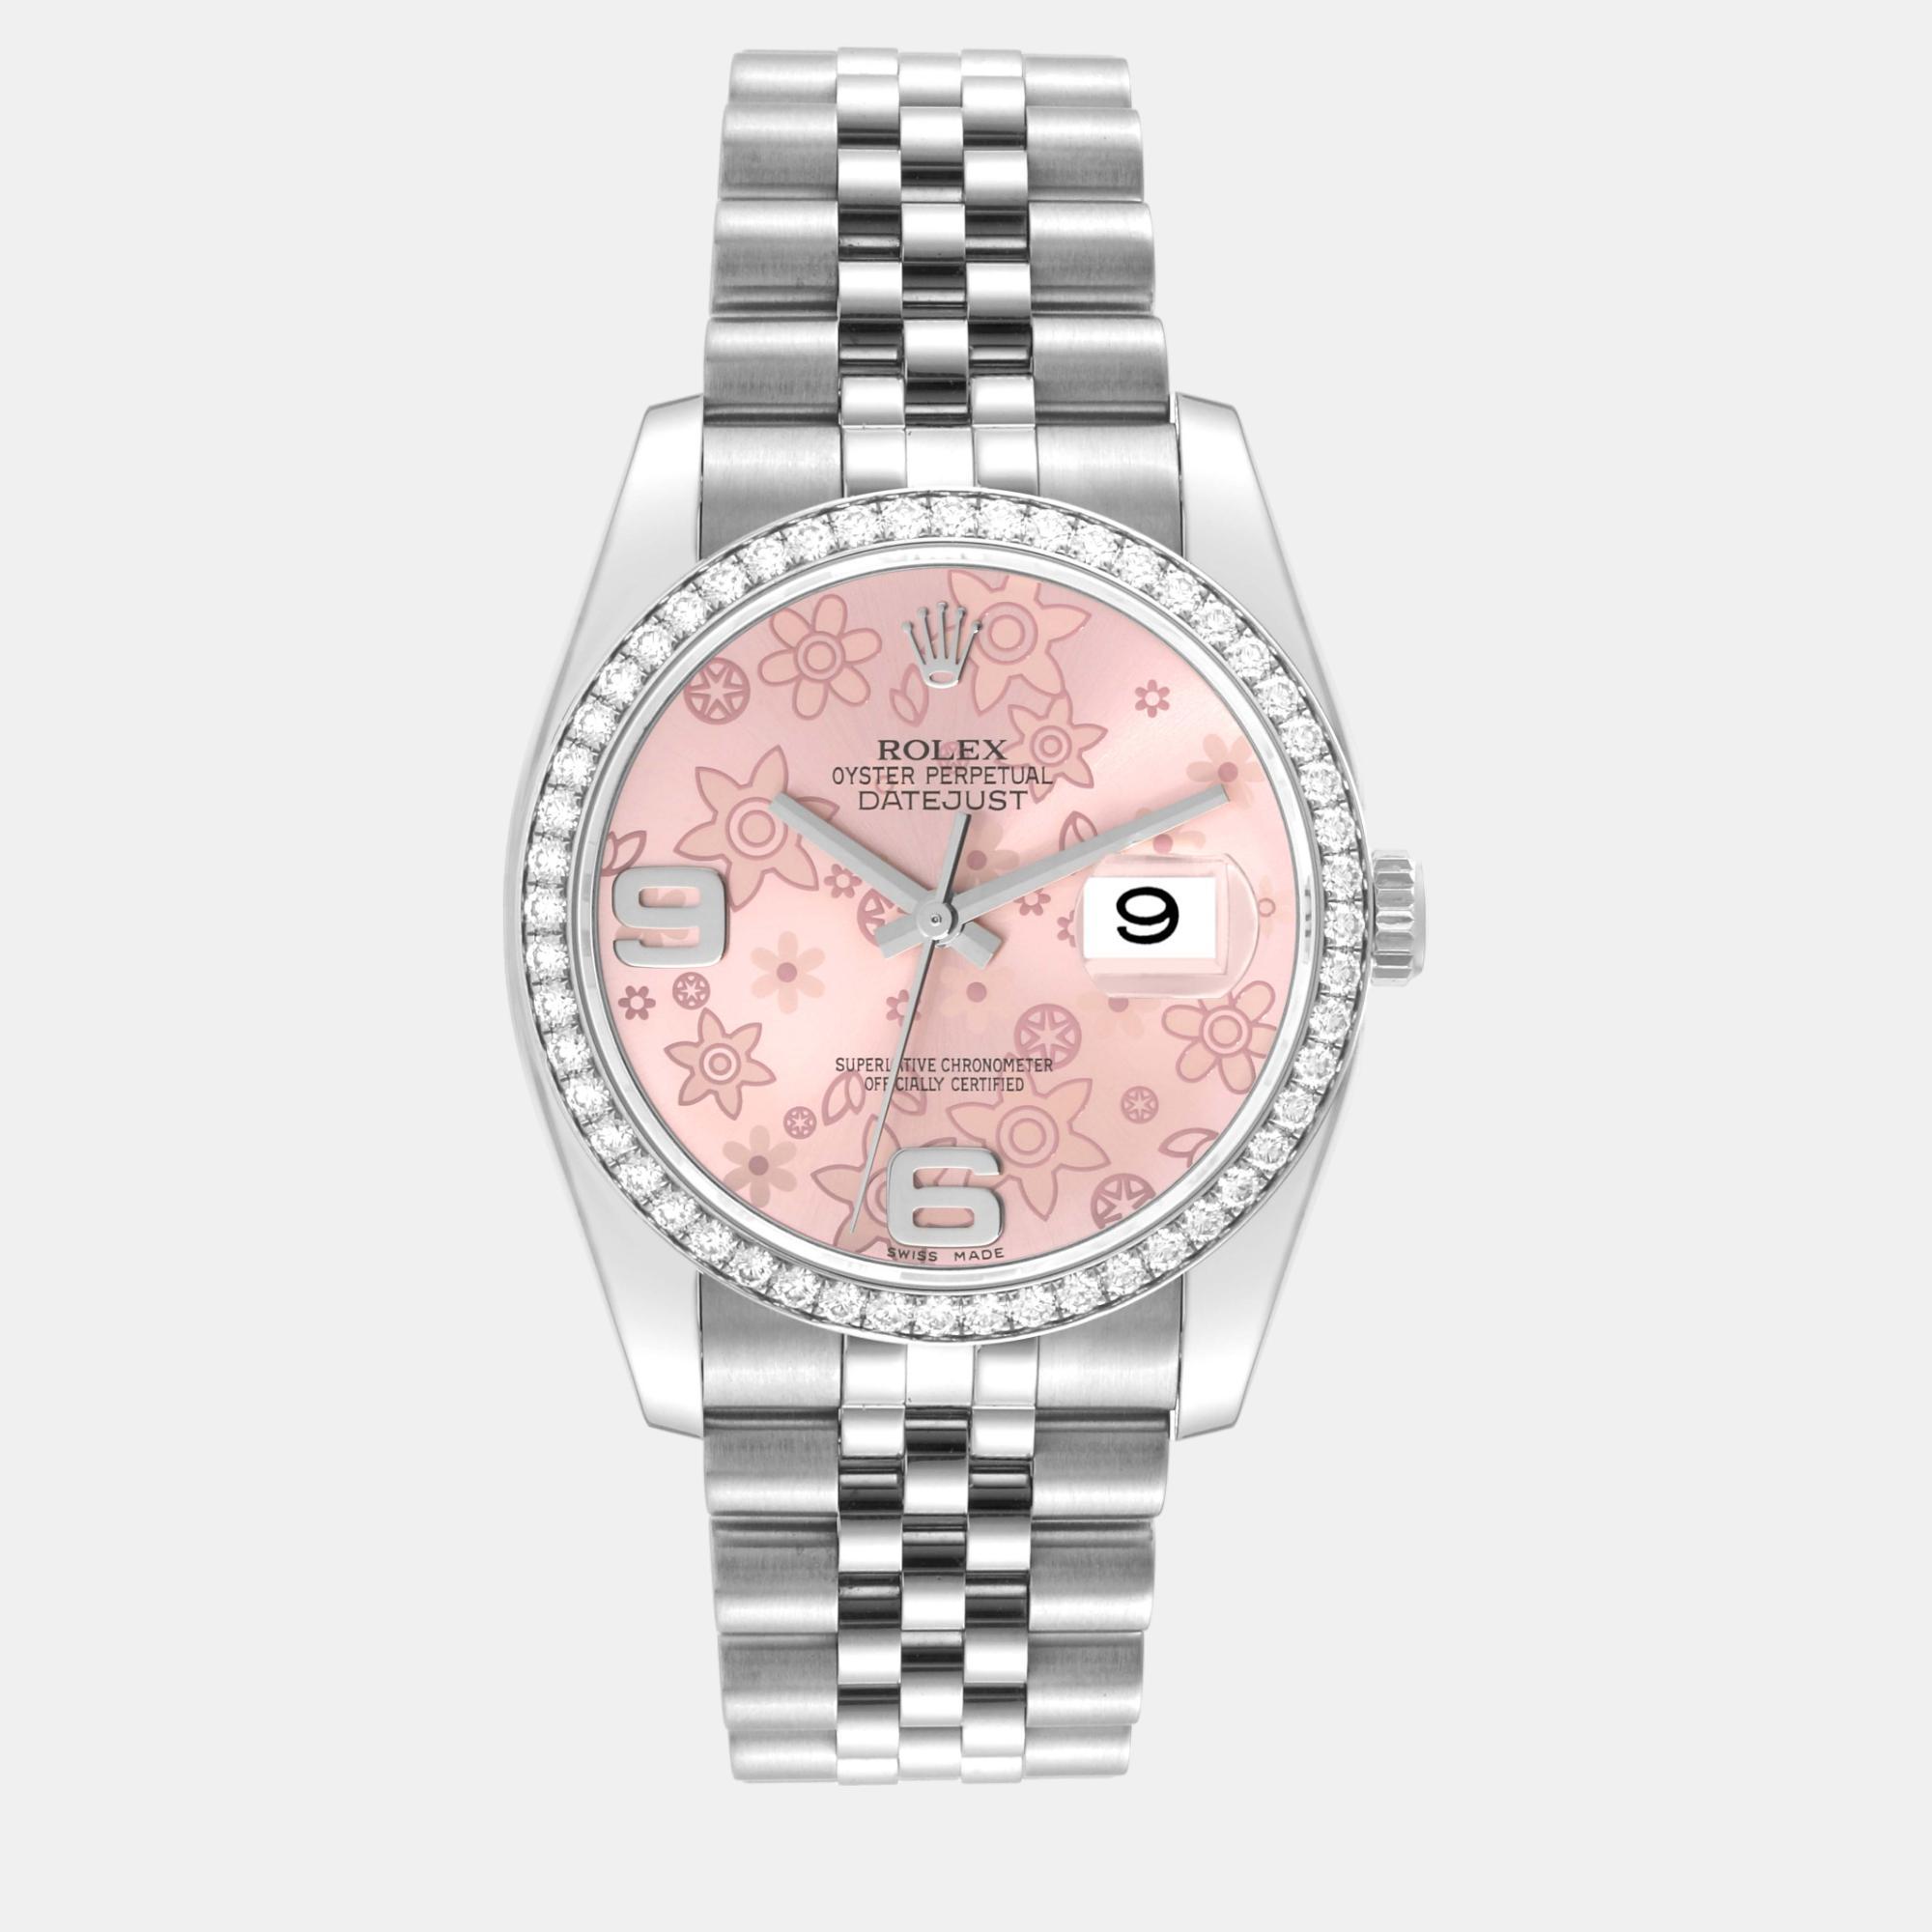 Rolex datejust pink flower dial diamond bezel steel watch 116244 36 mm